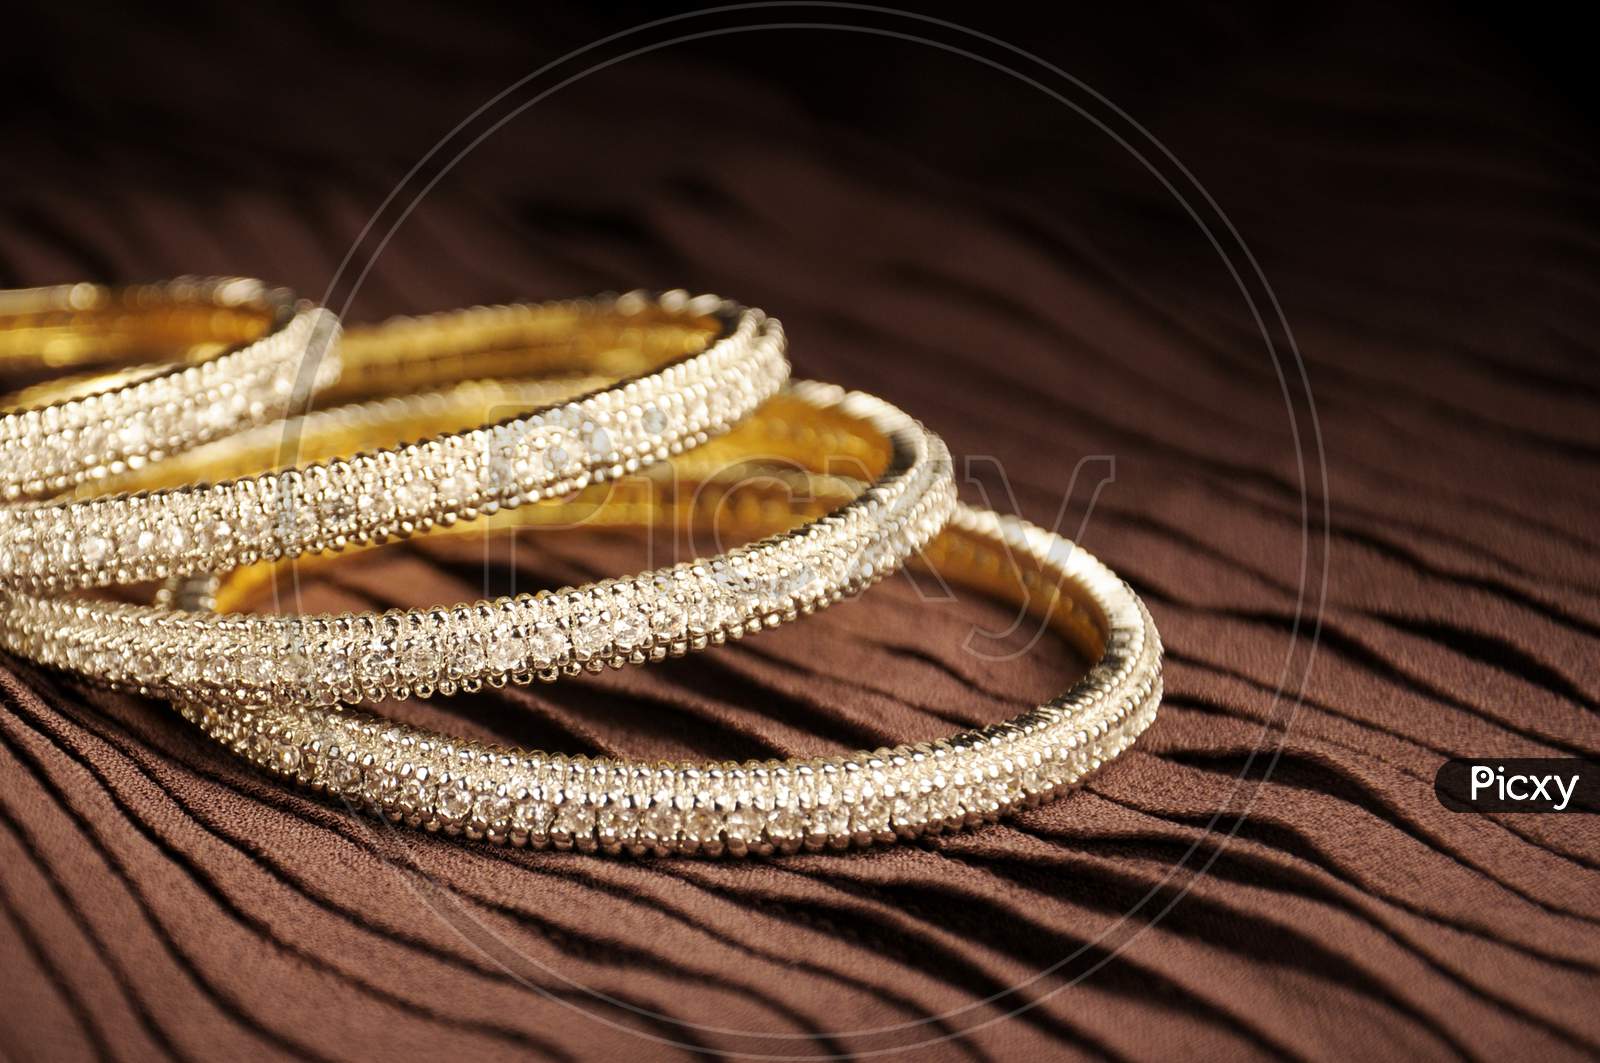 Online Jewelry Store India | Buy Gold & Real Diamond Jewellery | Kisna